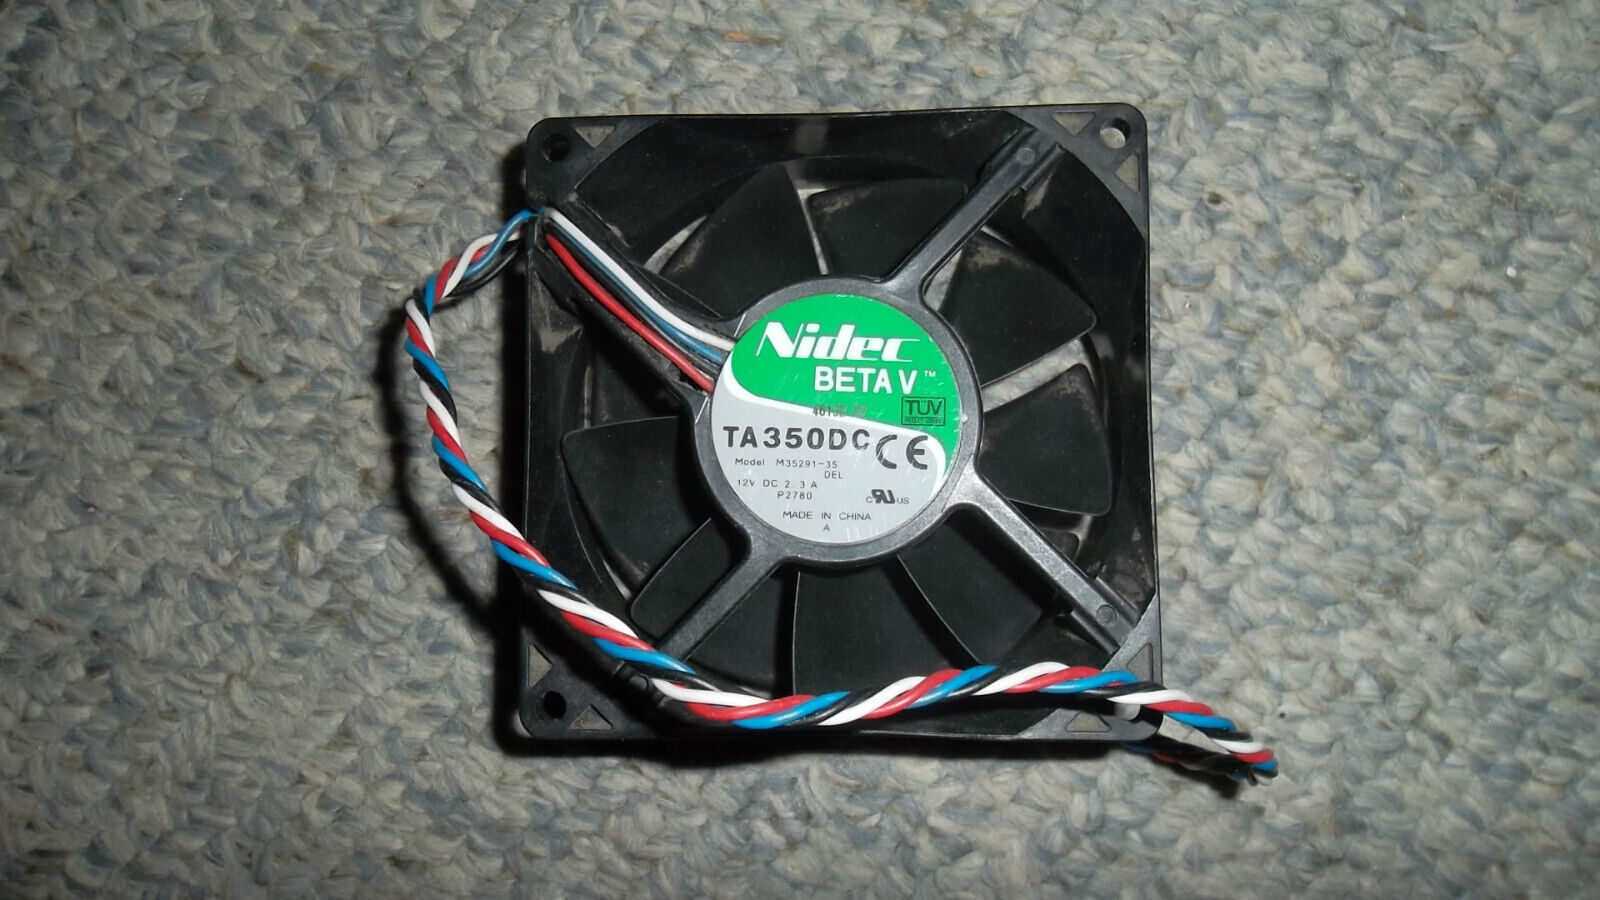 Nidec Beta-V TA350DC 5-PIN 4-WIRE Cooling Fan 12VDC